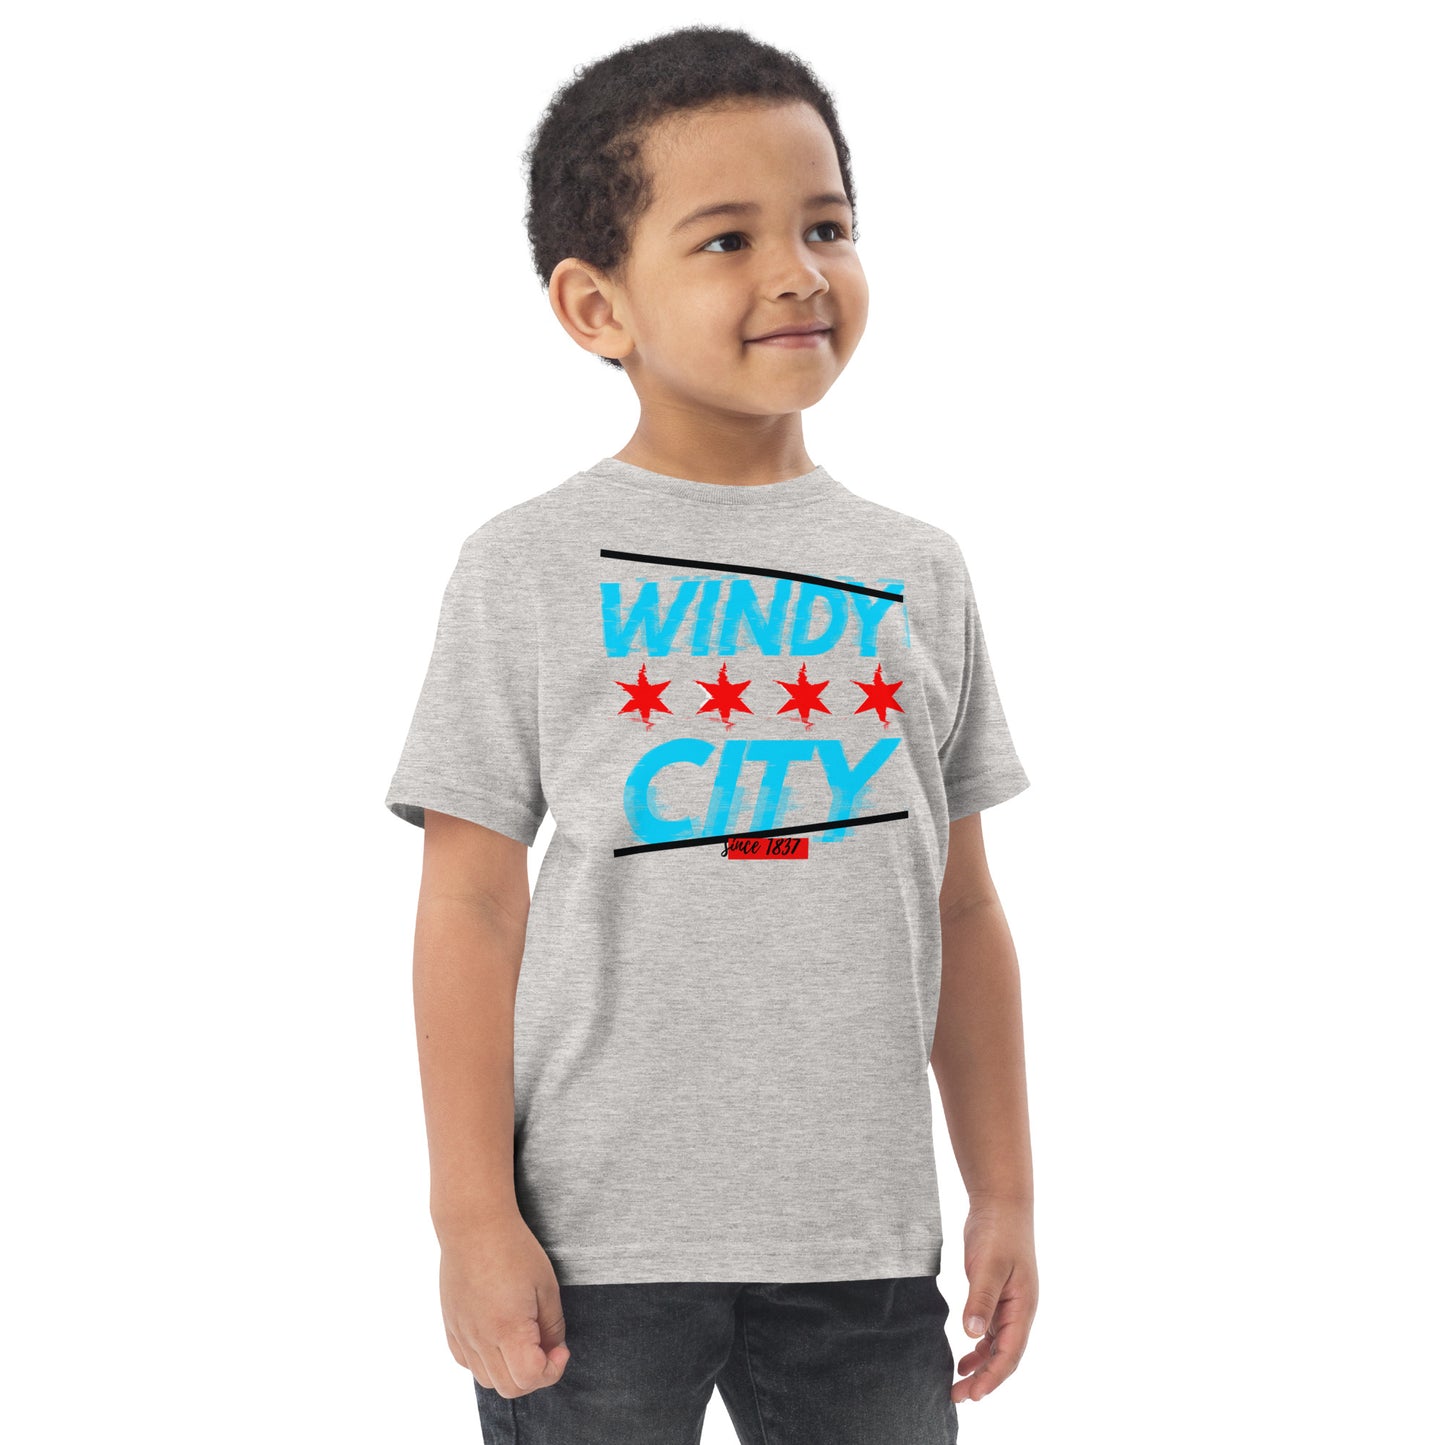 WIndy City (Toddler jersey t-shirt)